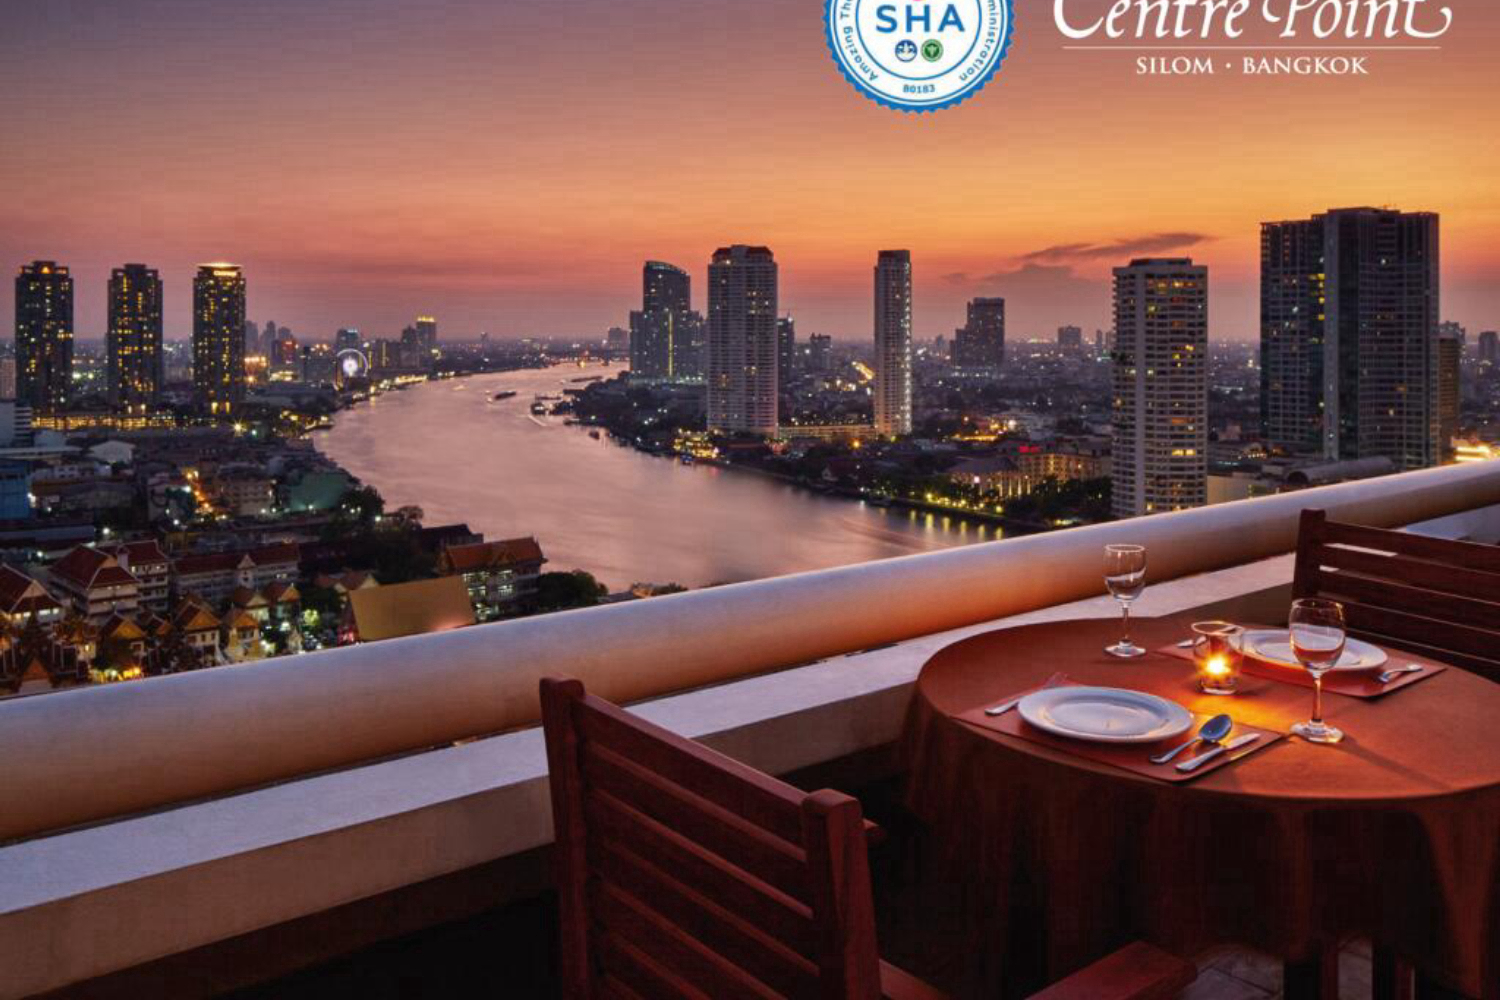 Centre Point Hotel Silom - Image 2